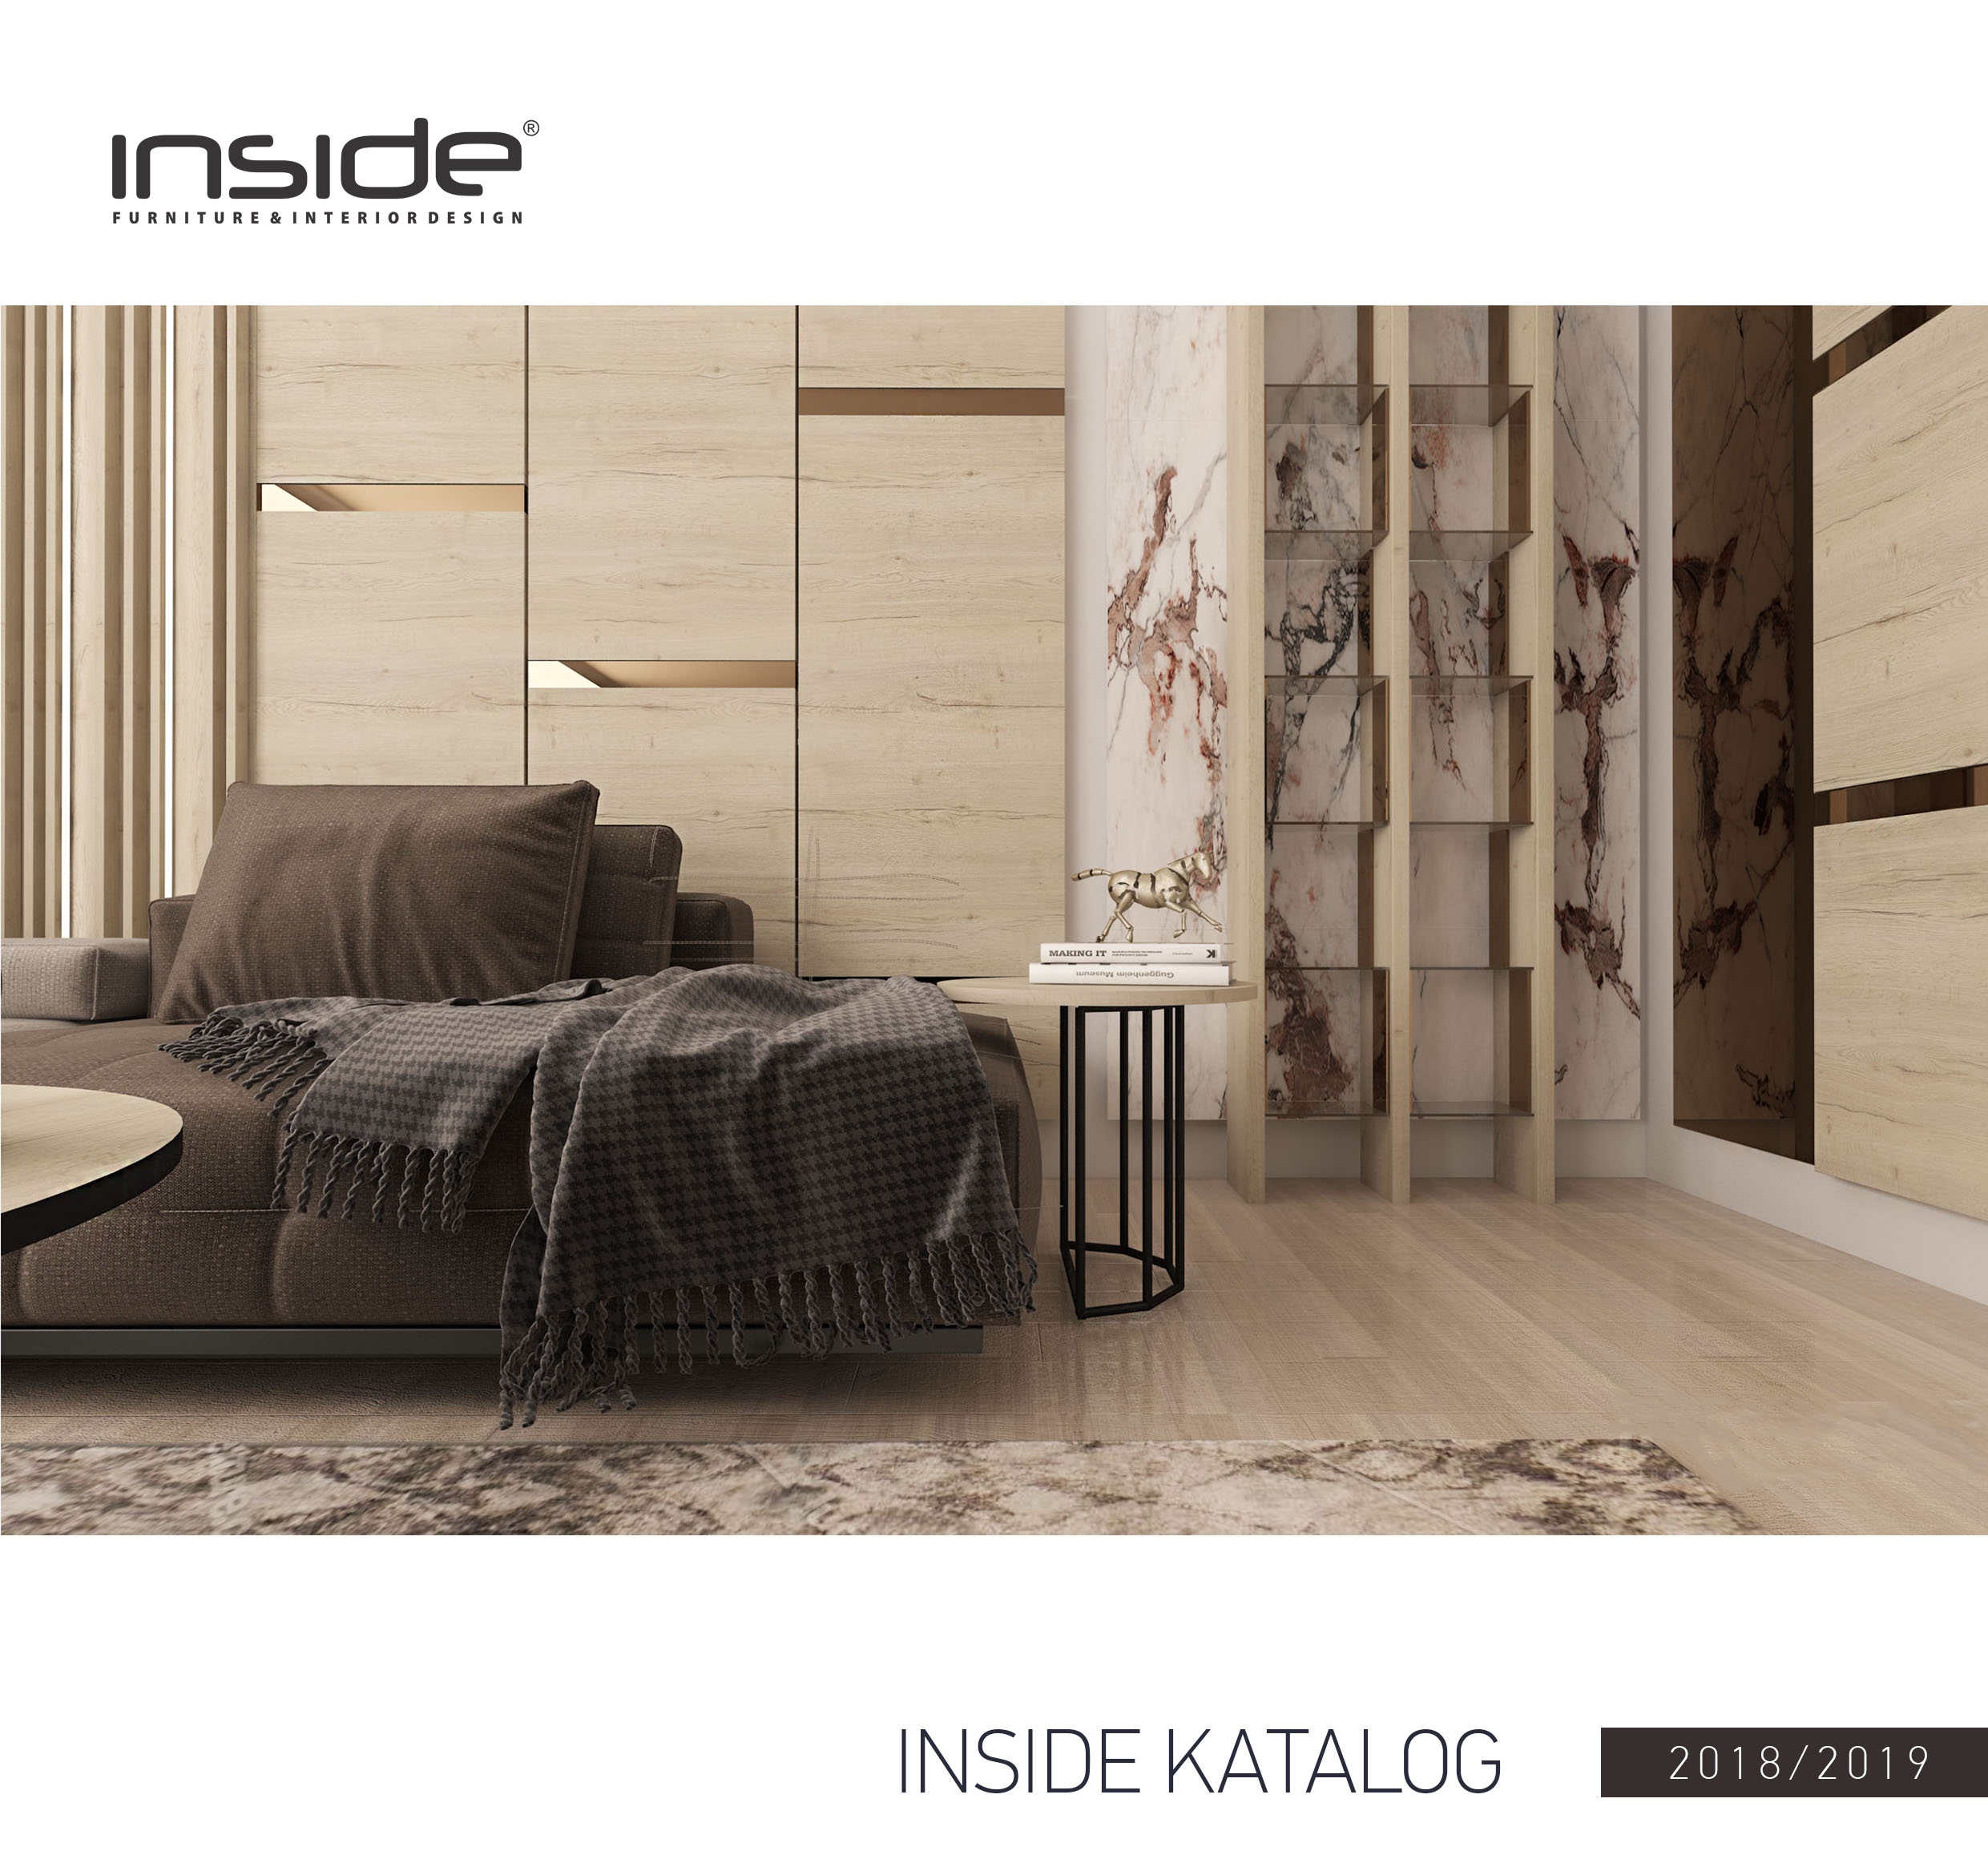 Katalog - Inside catalogue